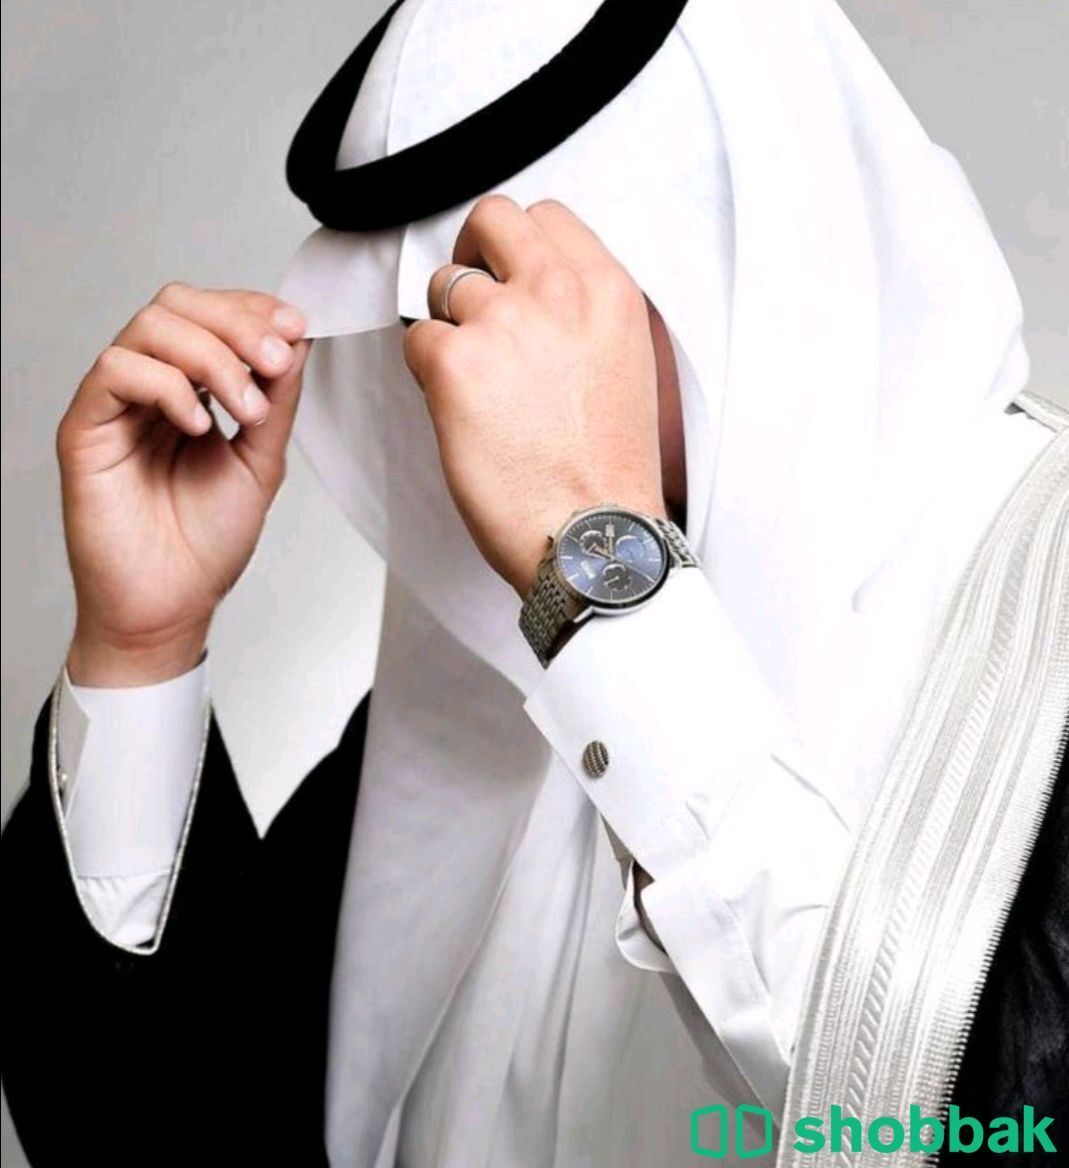 مصور حفلات زواجات ومناسبات جدة Shobbak Saudi Arabia